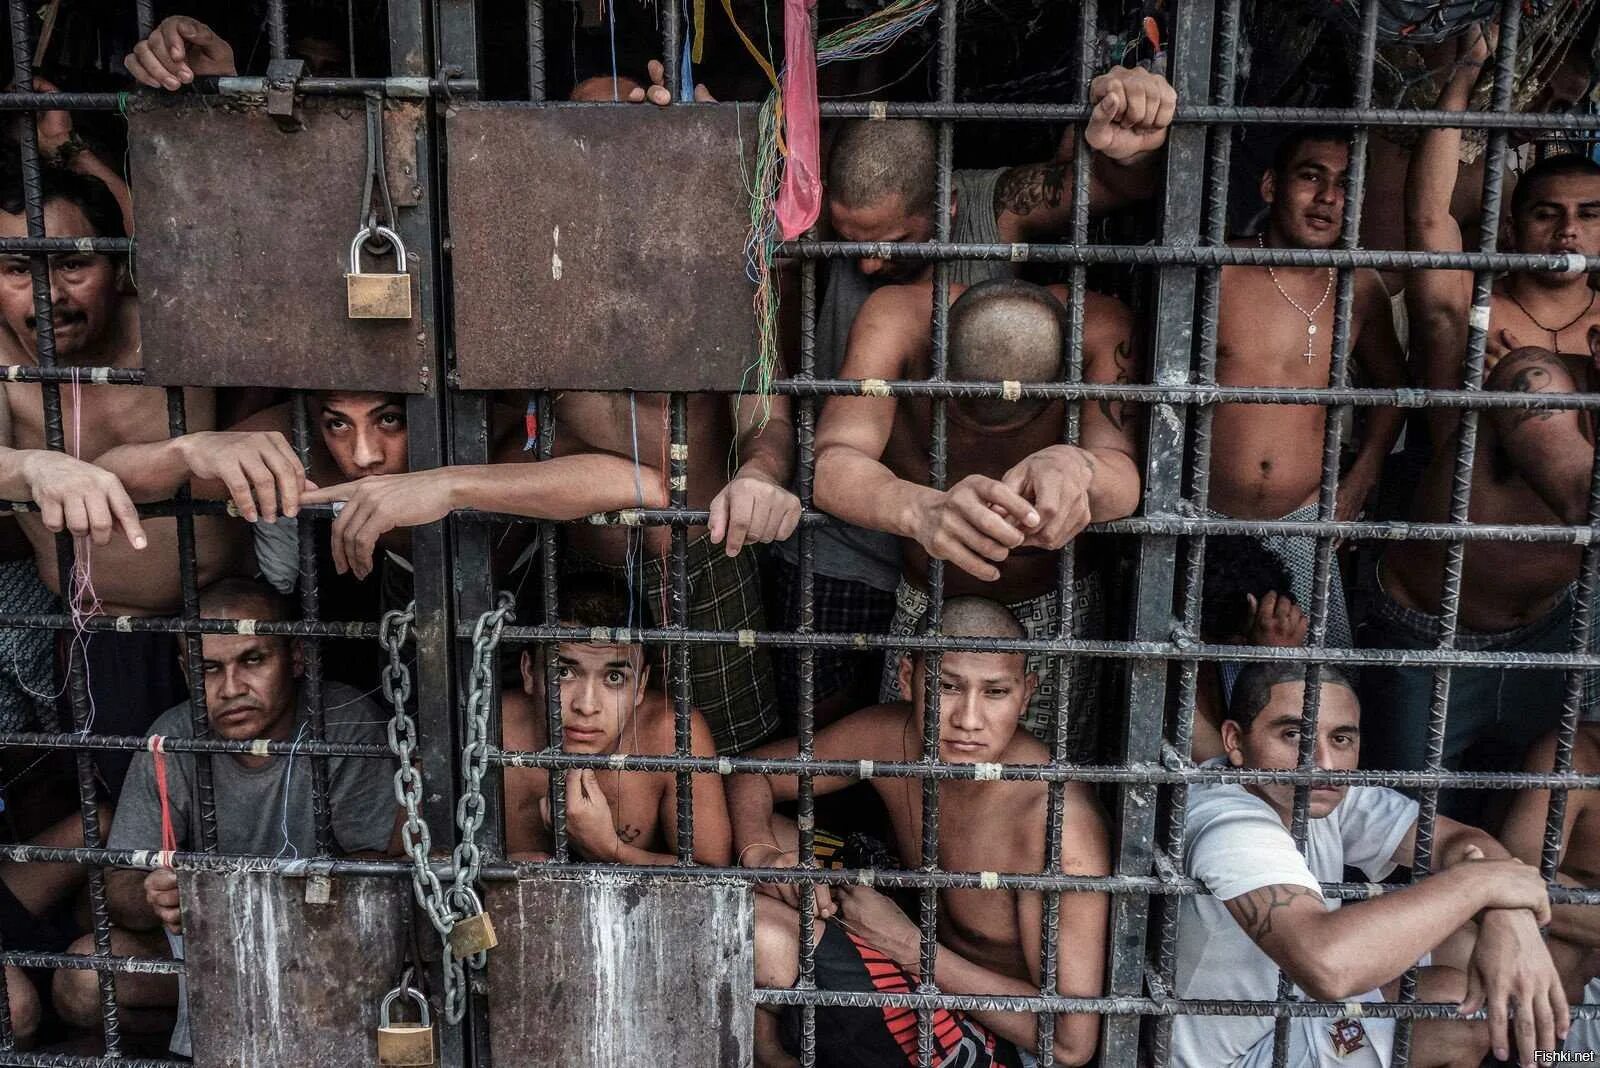 Тюрьма Банкванг Таиланд. Сальвадор, тюрьма Сьюдад Баррио. Тюрьма в Тайланде Банг Кванг. Самая жесткая группа